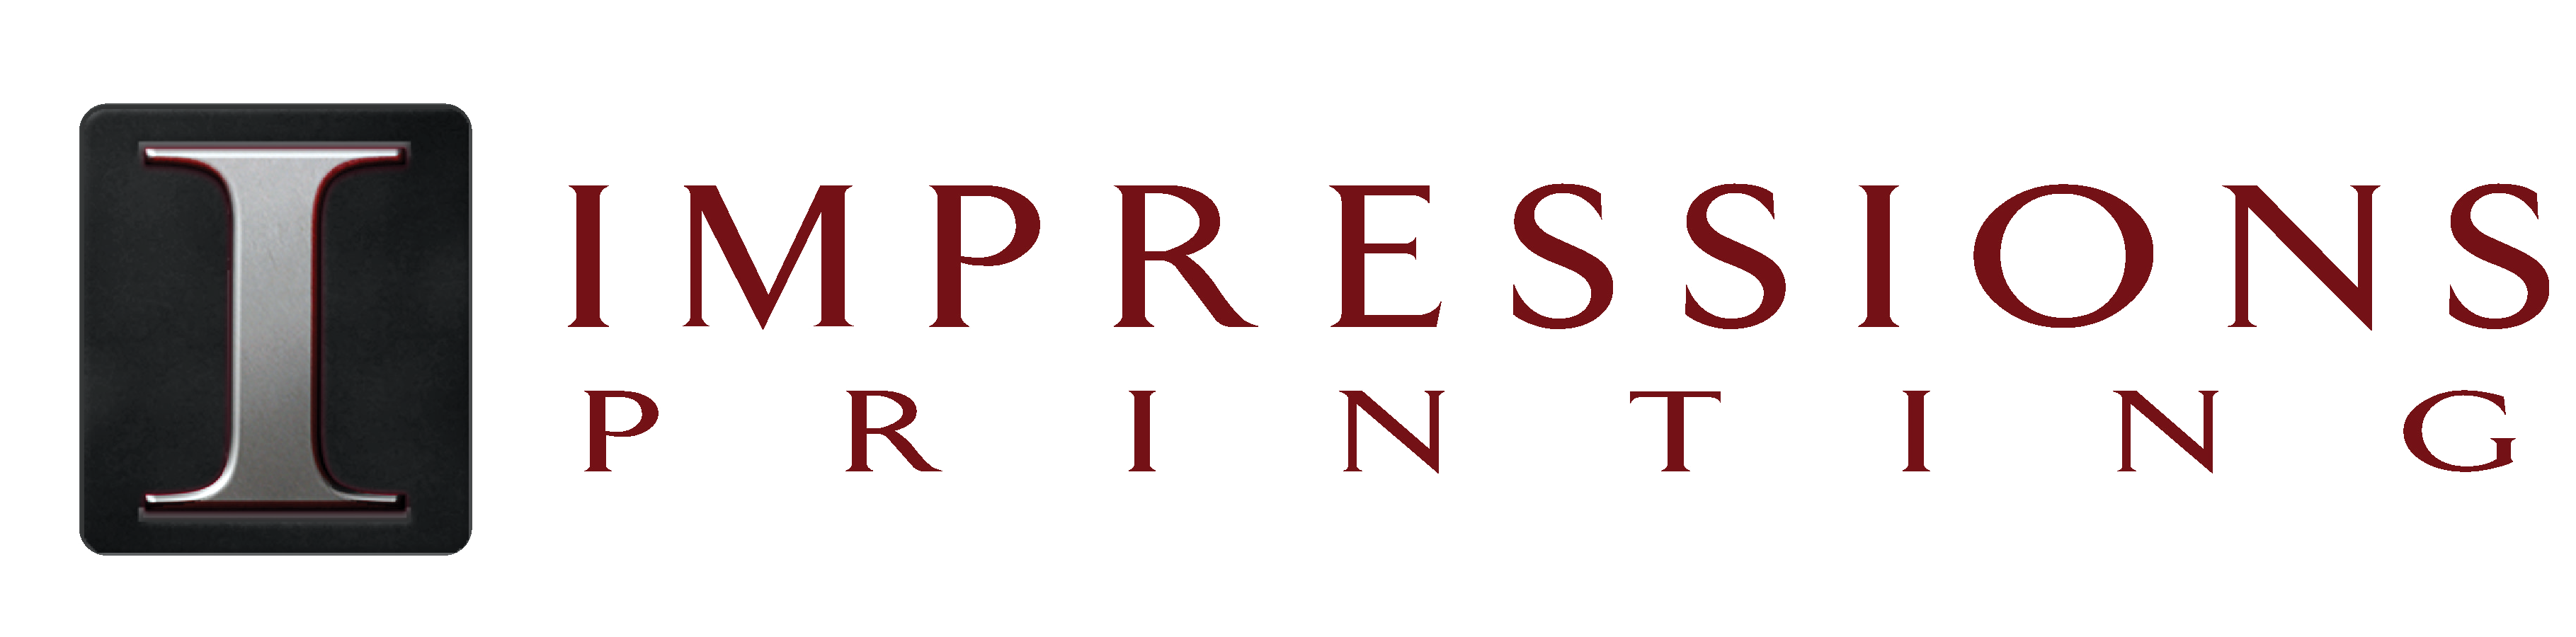 Impressions Printing logo